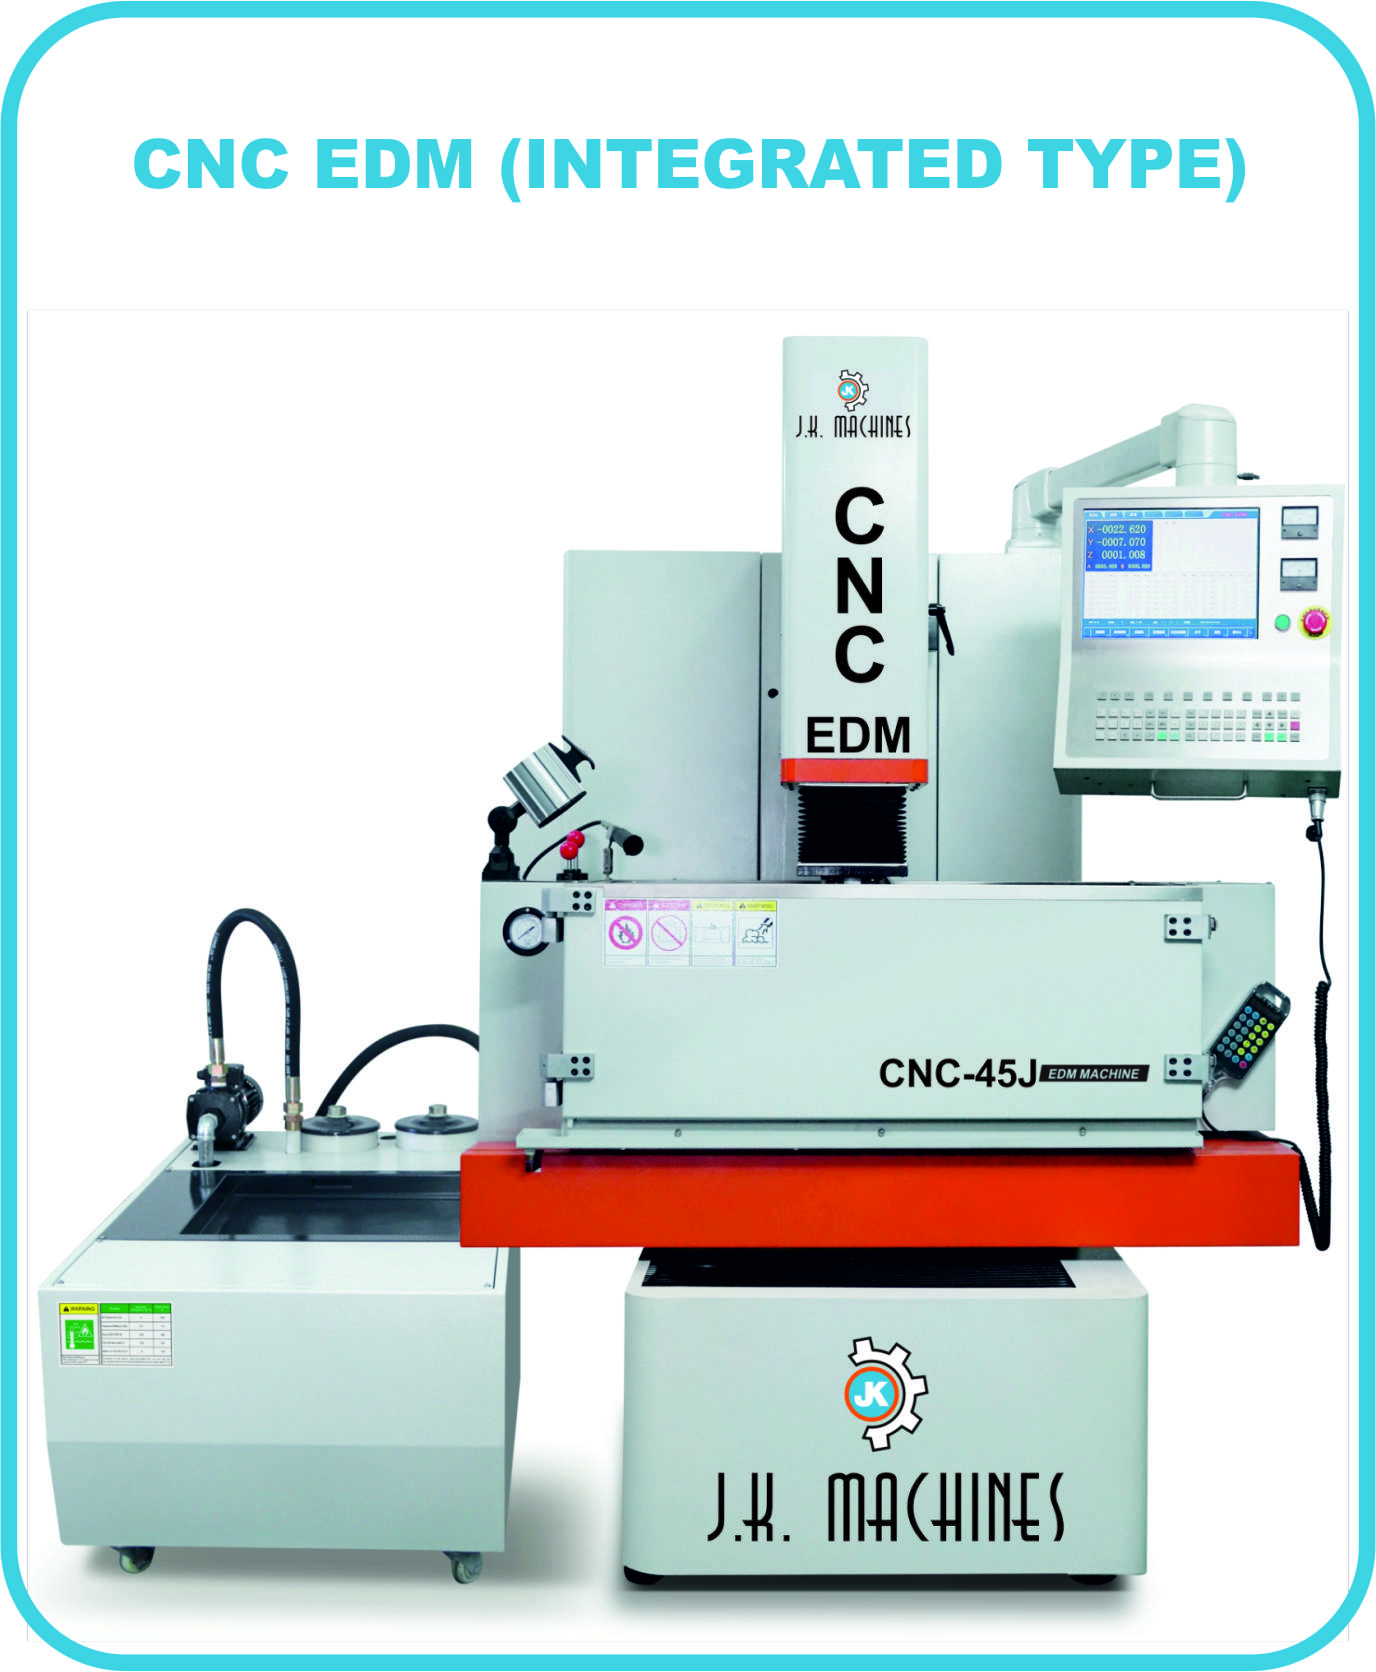 CNC EDM Integrated Type